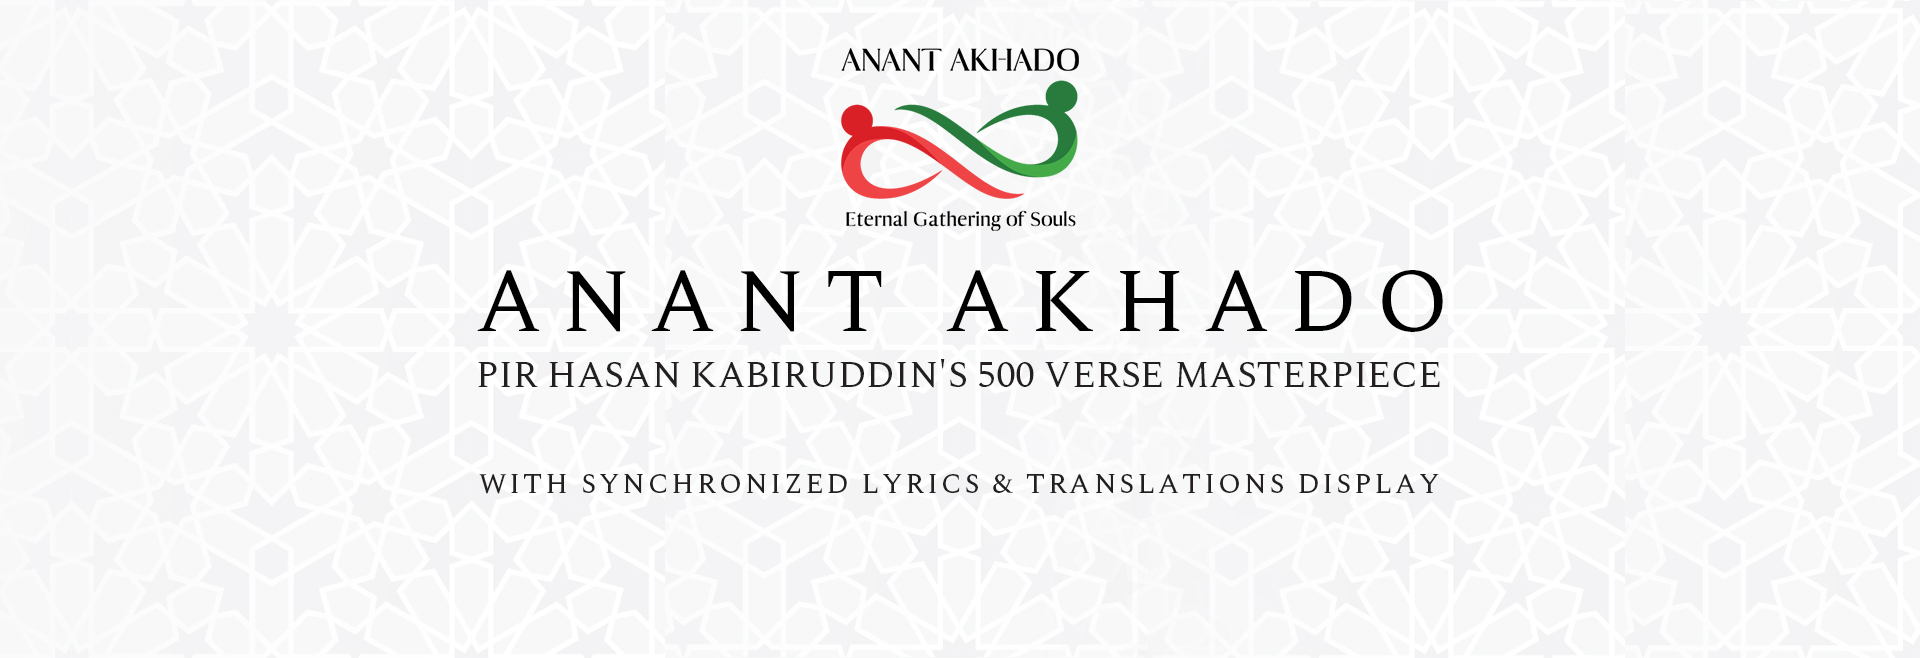 Anant Akhado Service